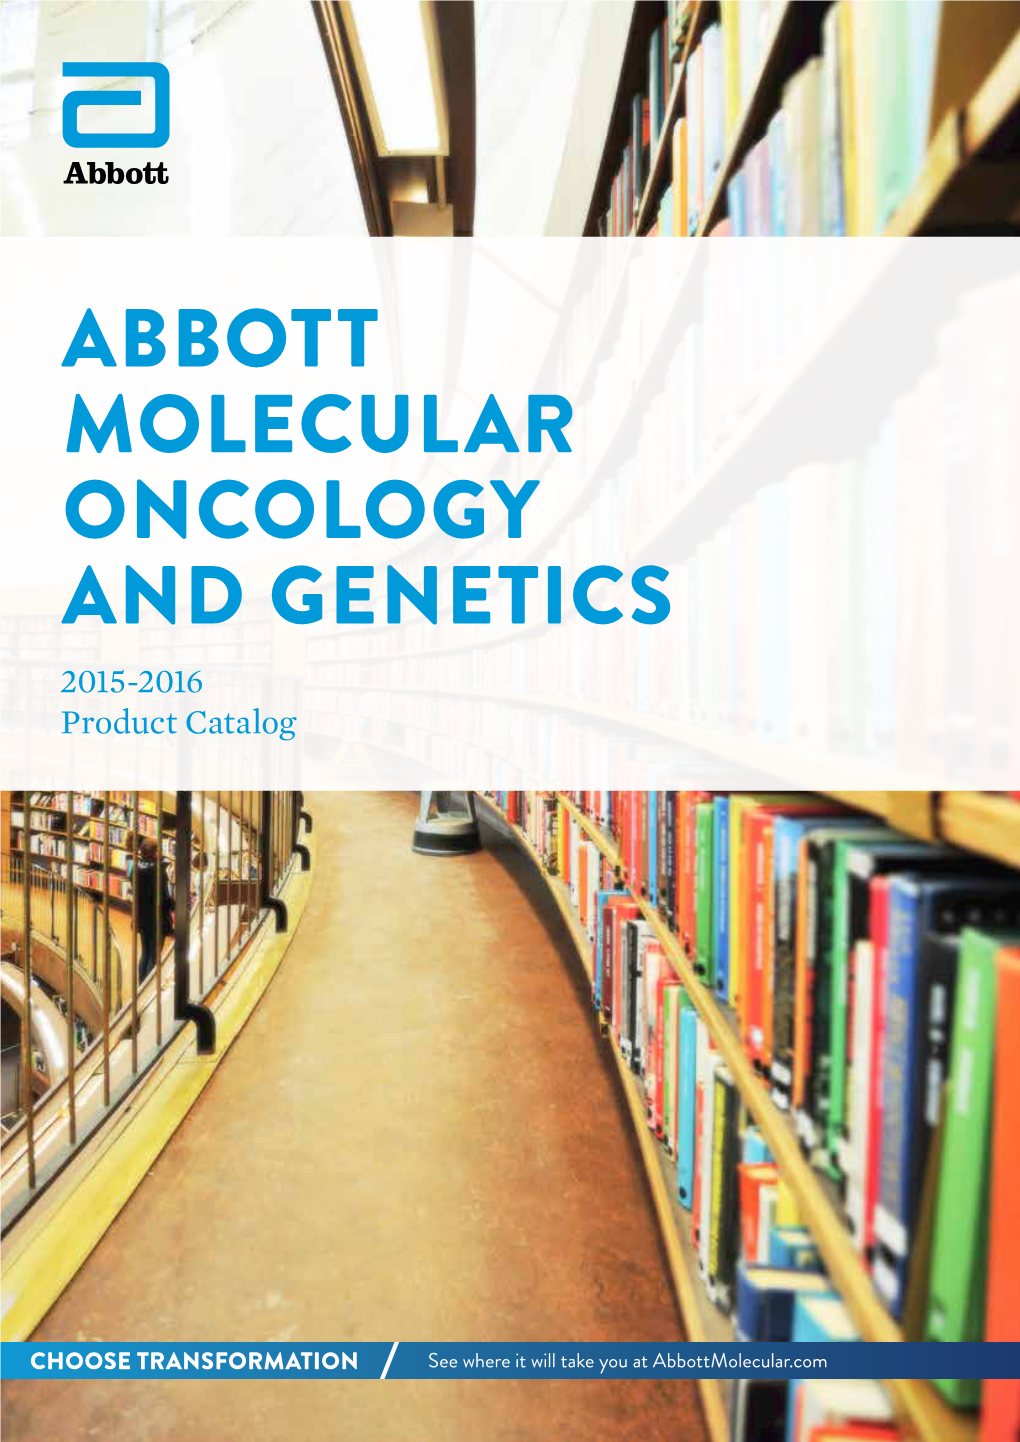 ABBOTT MOLECULAR ONCOLOGY and GENETICS 2015-2016 Product Catalog